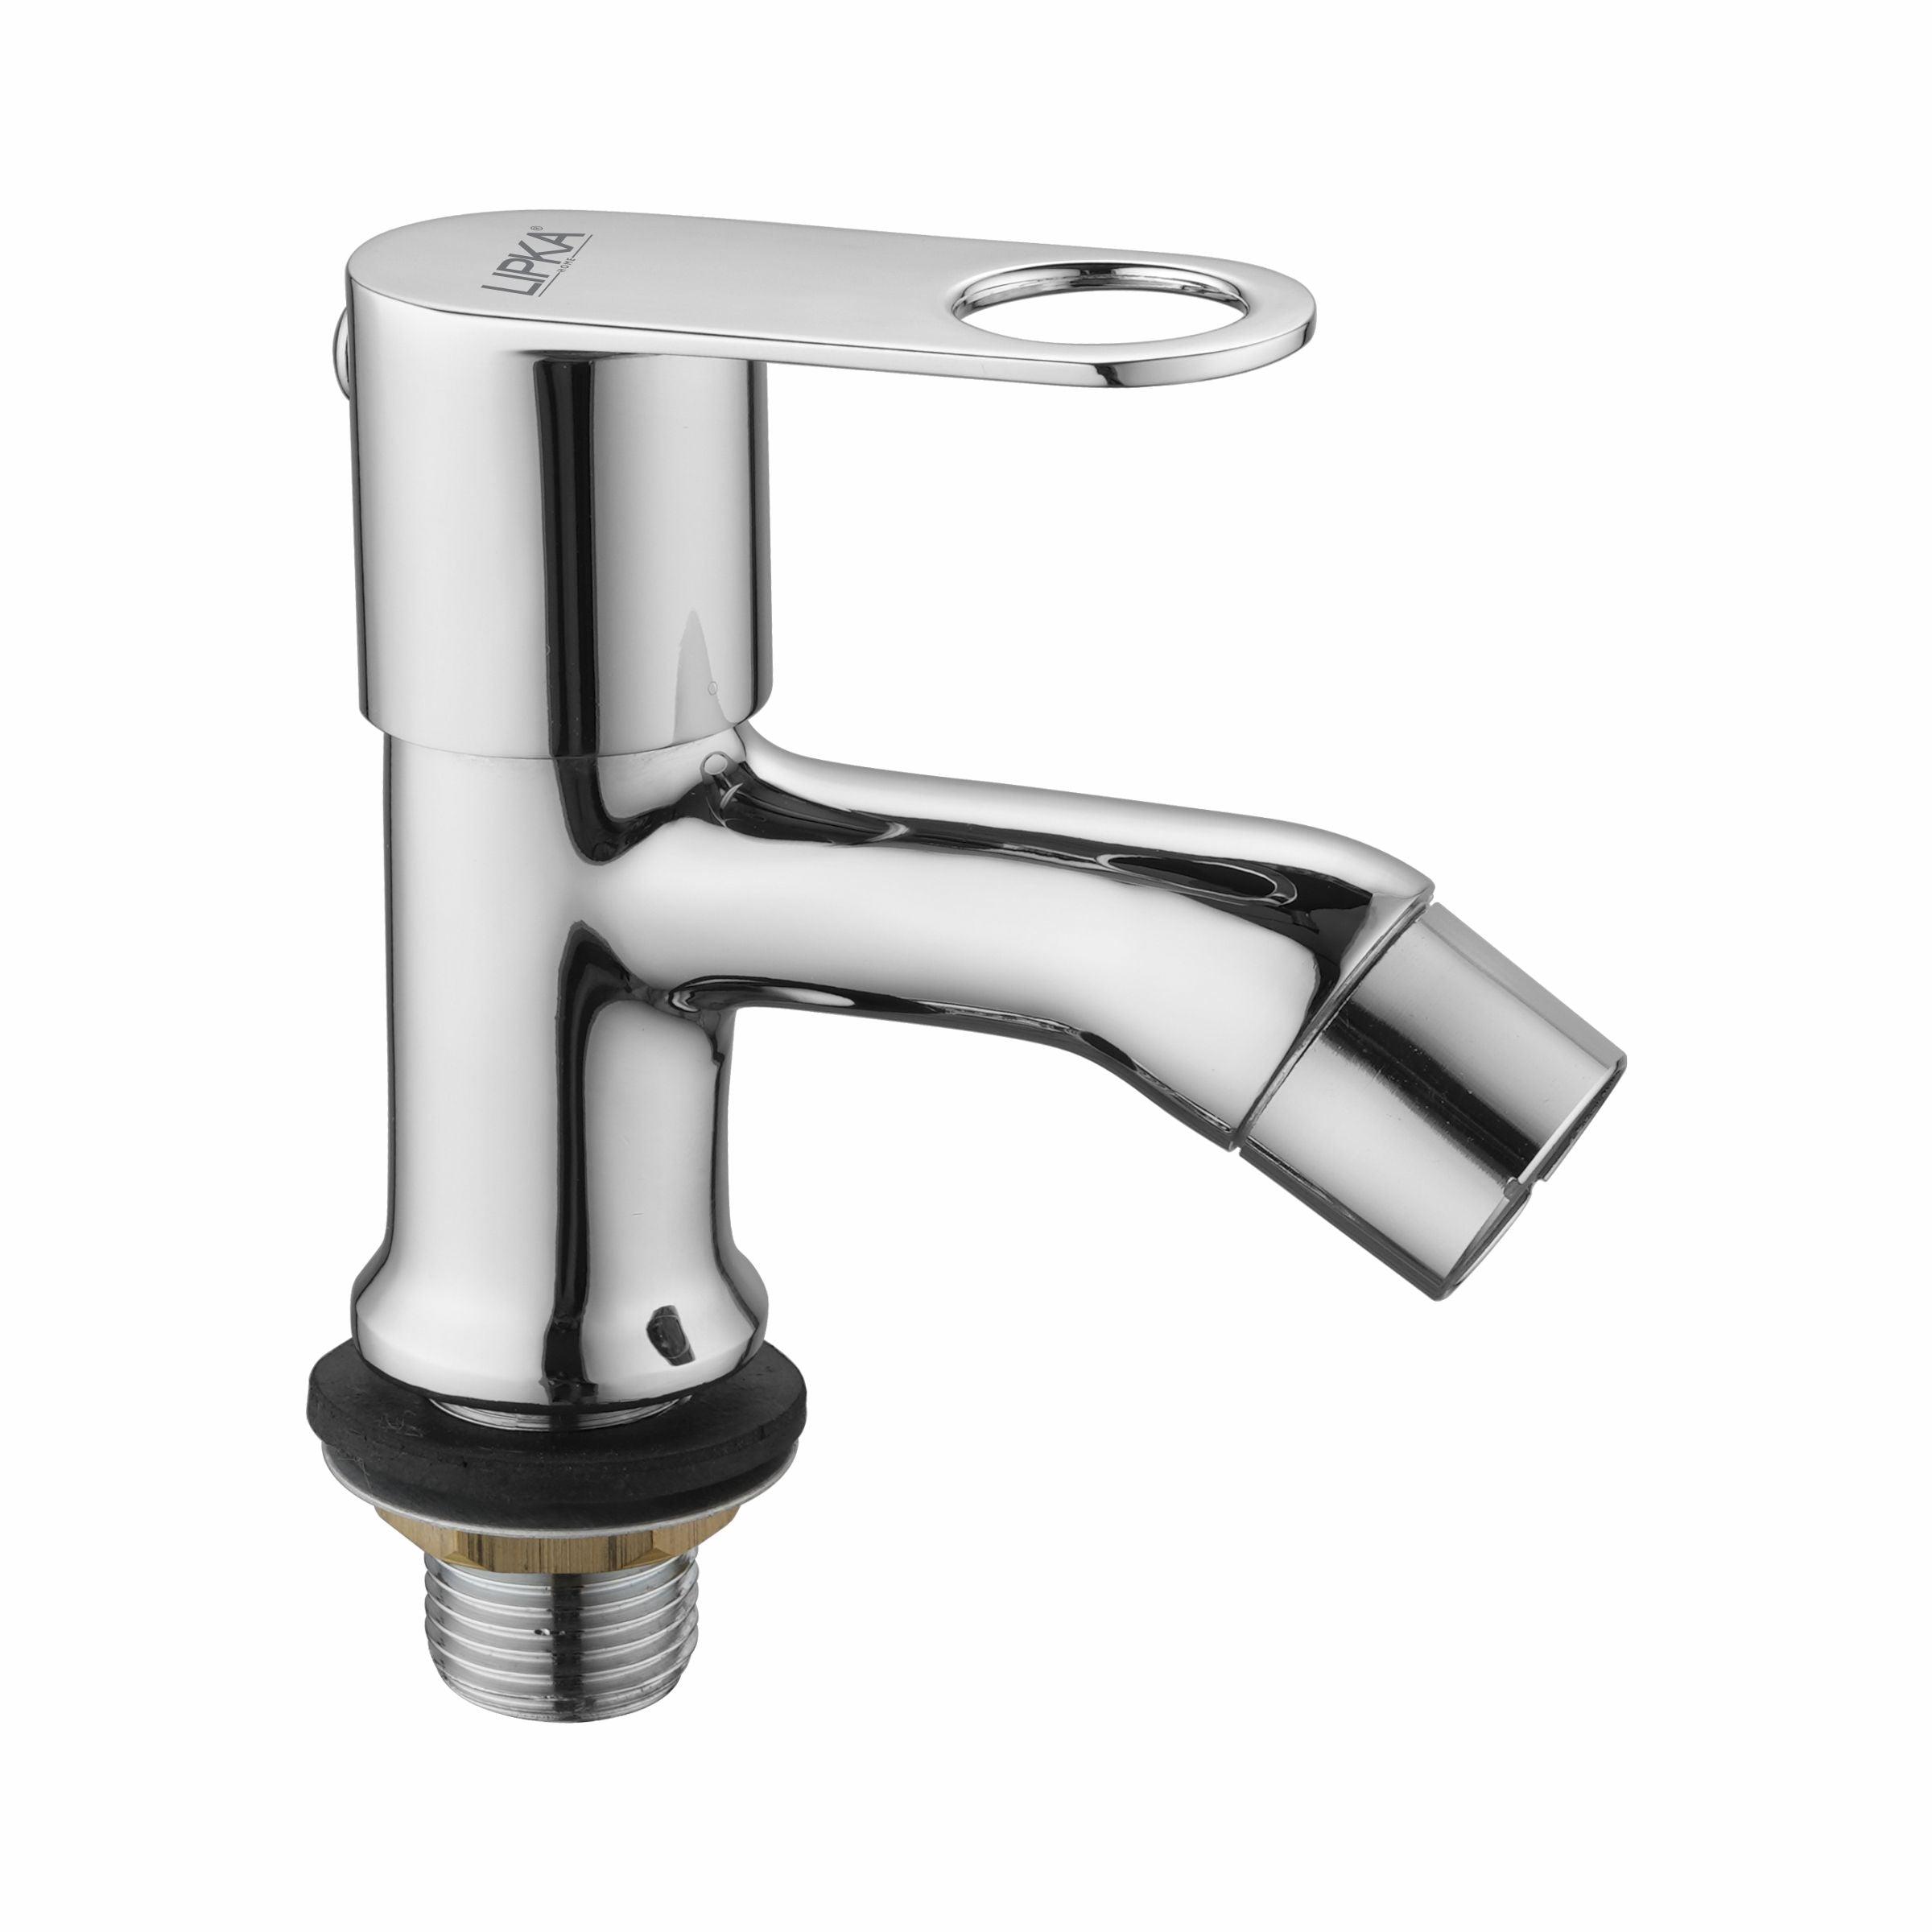 Orbiter Pillar Tap Brass Faucet - LIPKA - Lipka Home